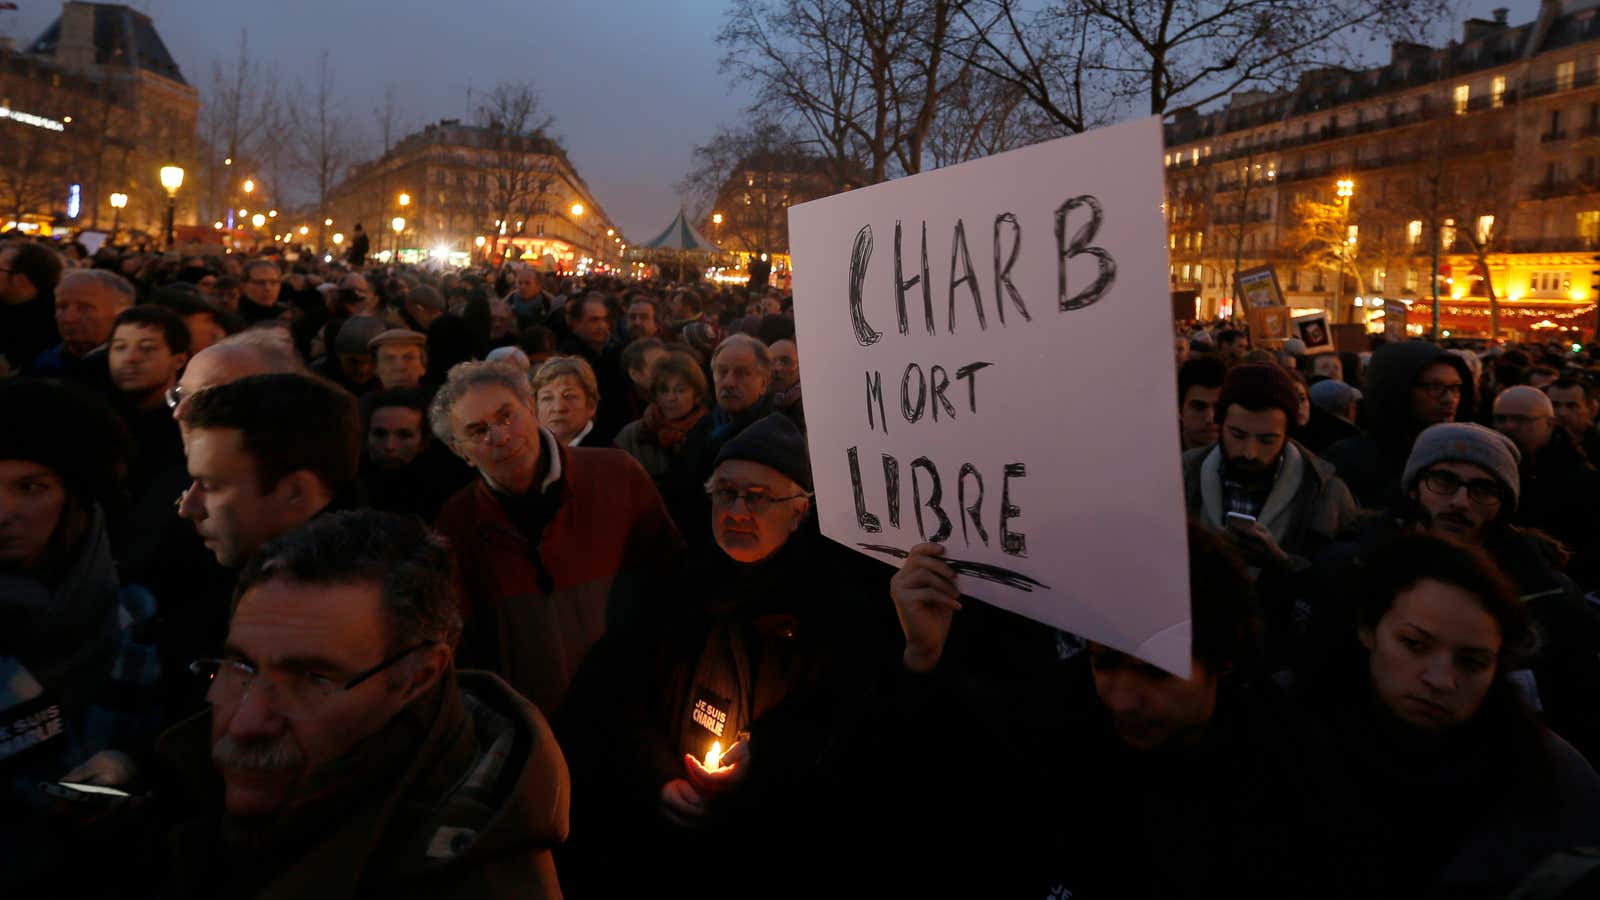 “Charb died free”